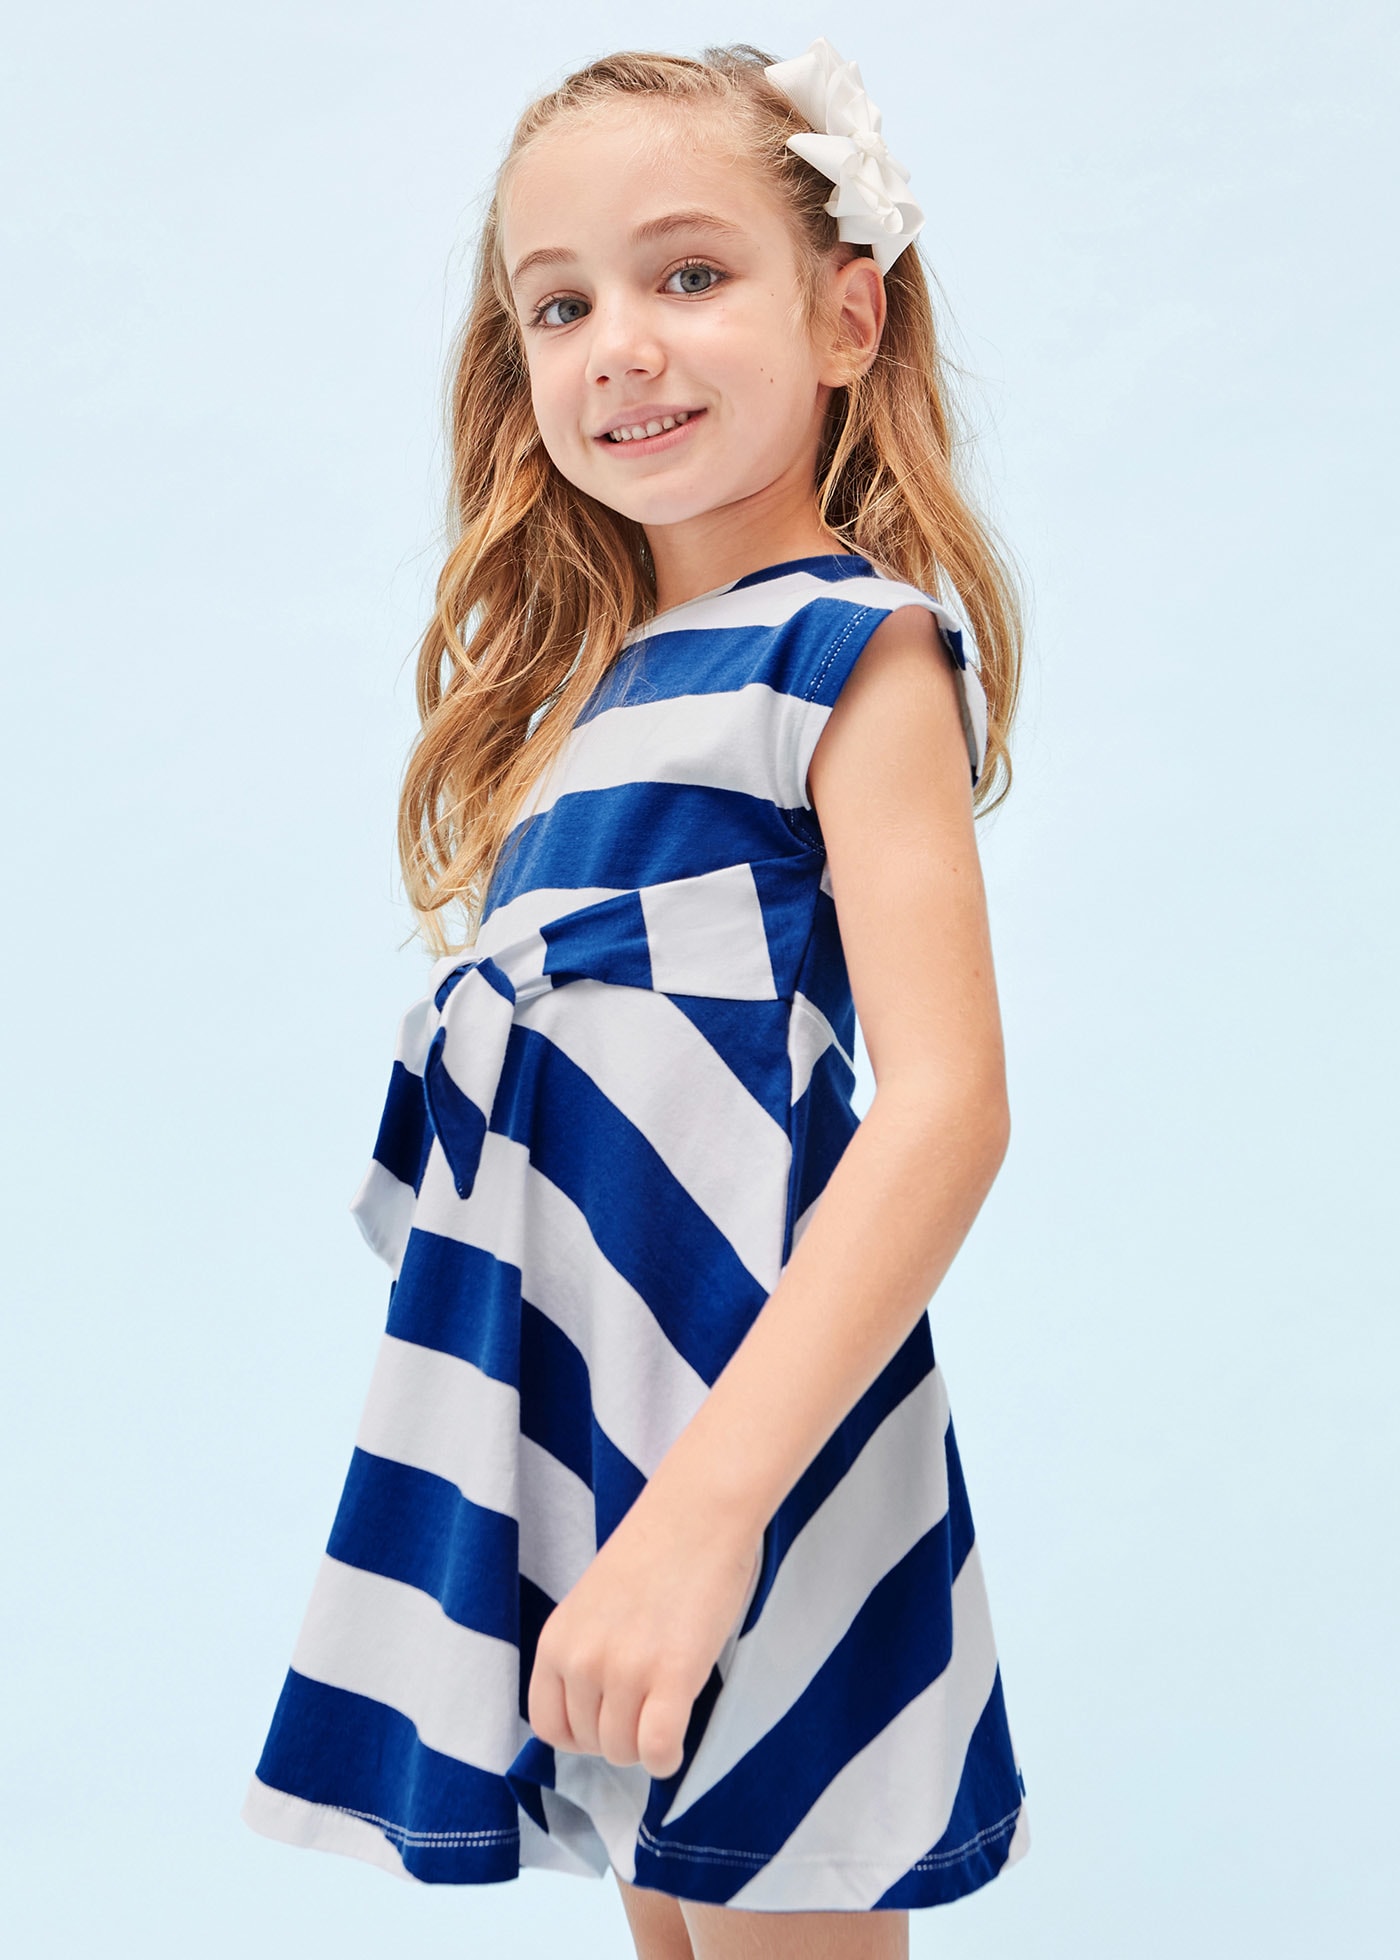 Girls Sleeveless White & Blue Striped Dress - New